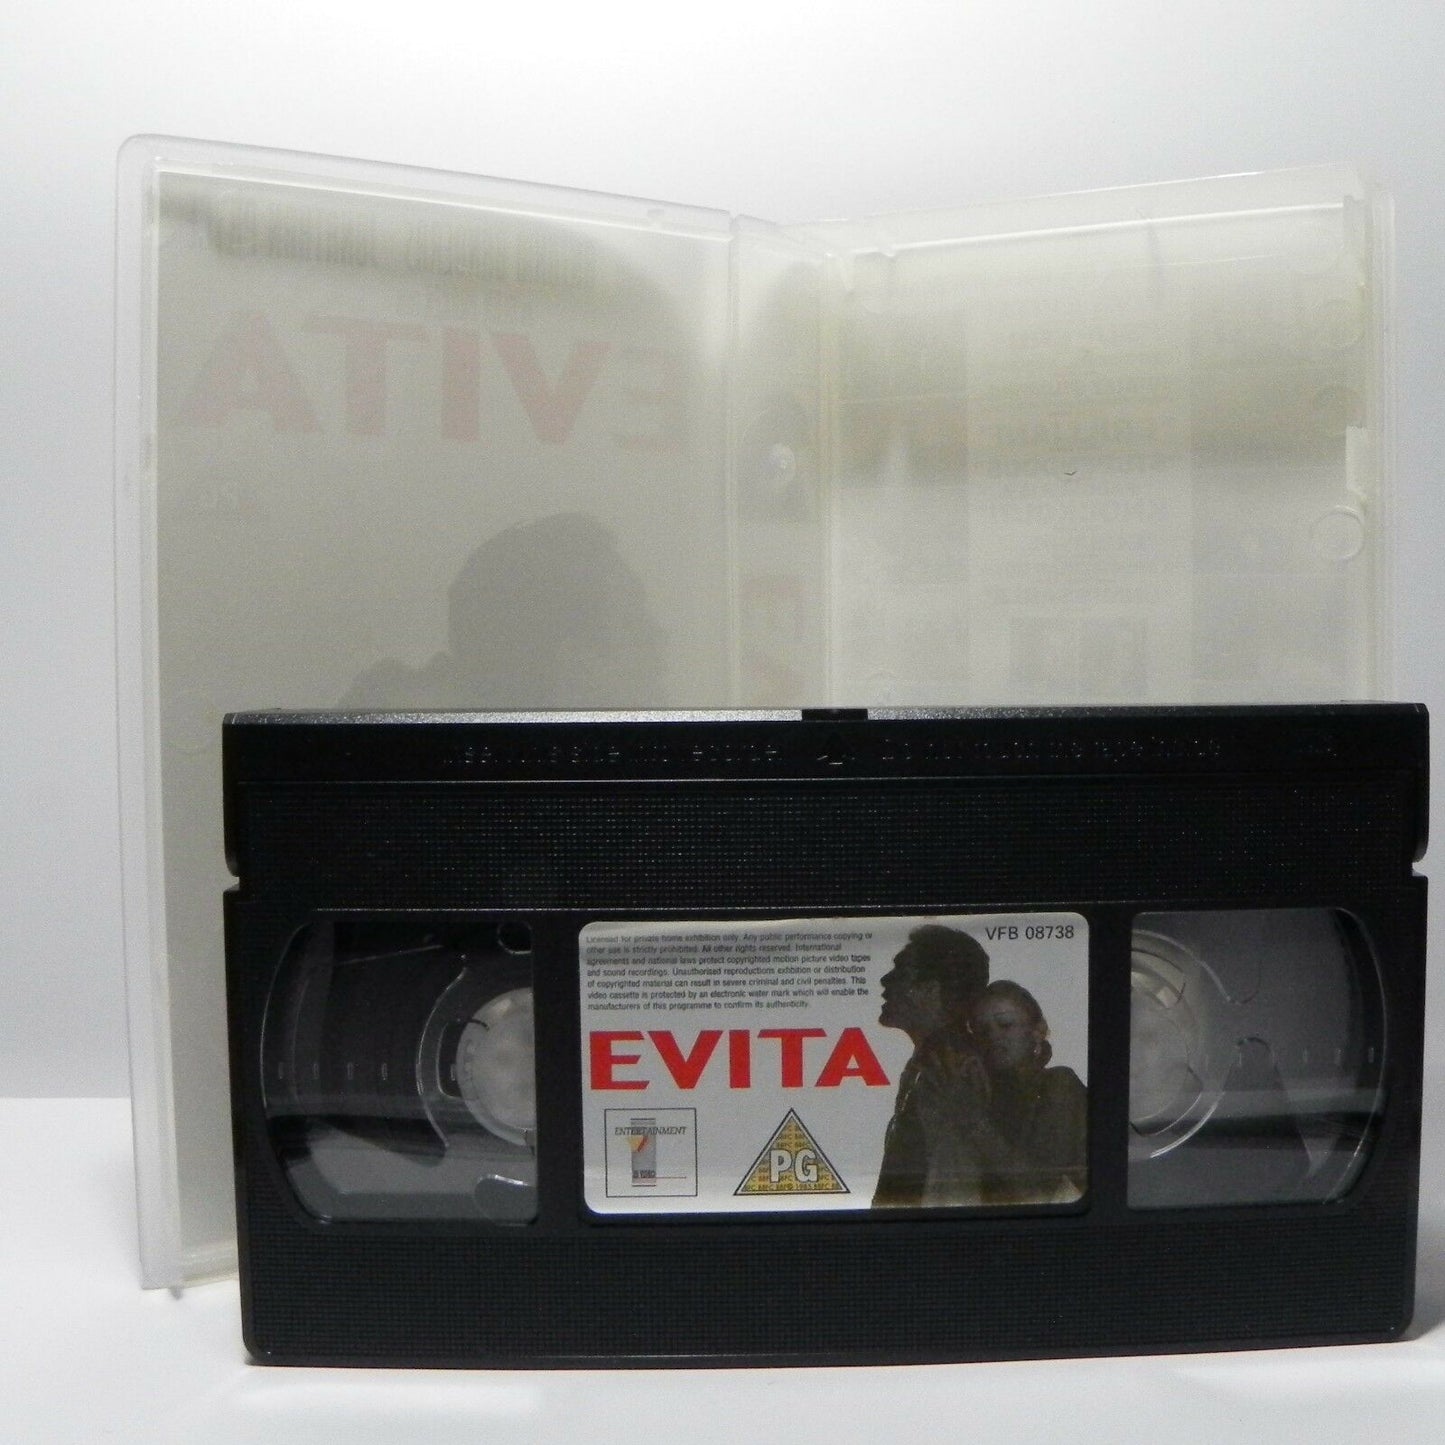 Evita: A.Parker Film - Based On True Story - Madonna/A.Banderas/J.Pryce - VHS-